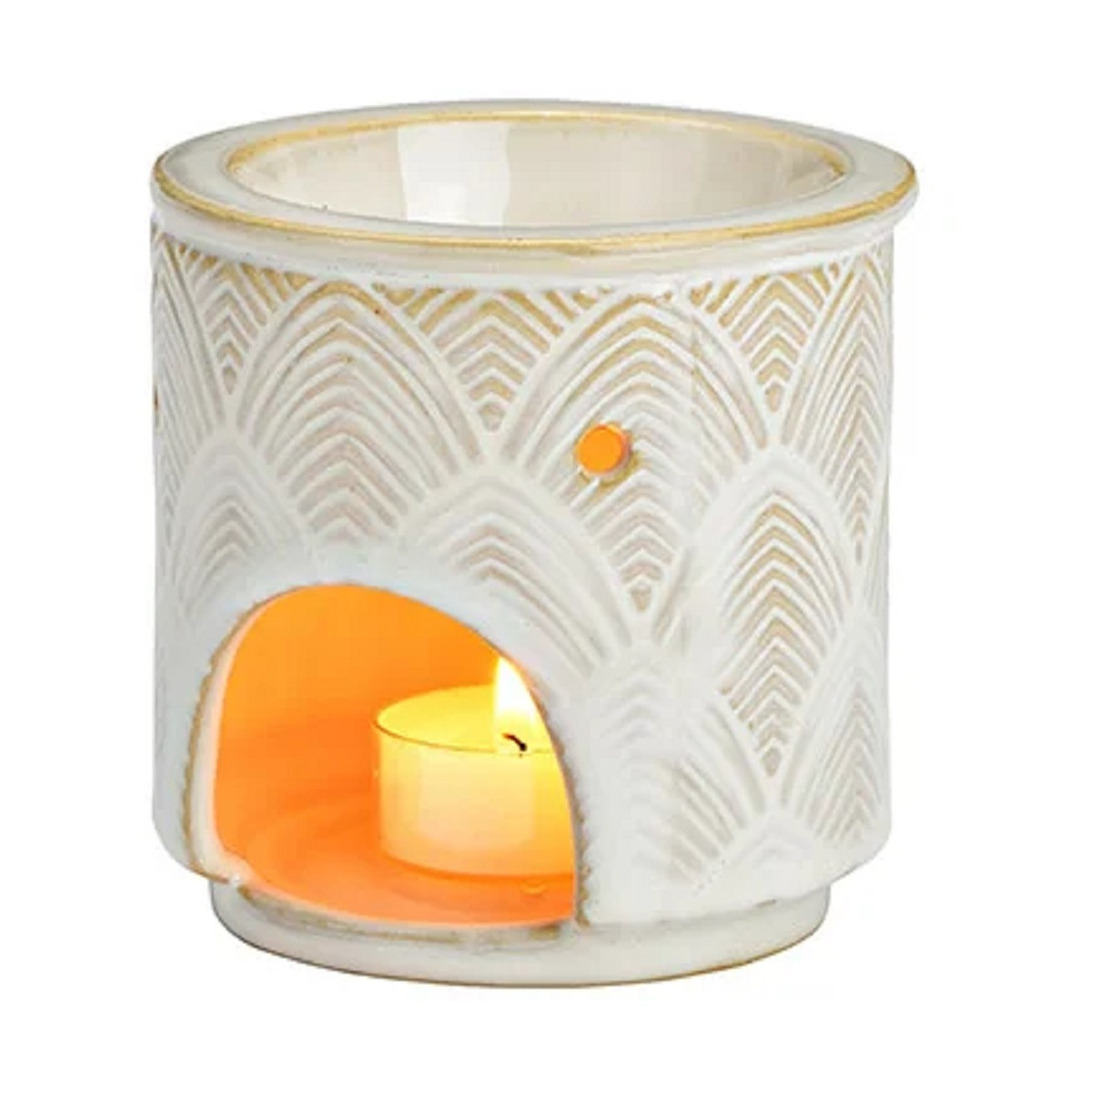 Geurbrander voor amberblokjes-geurolie keramiek creme wit 10 x 10 x 10 cm